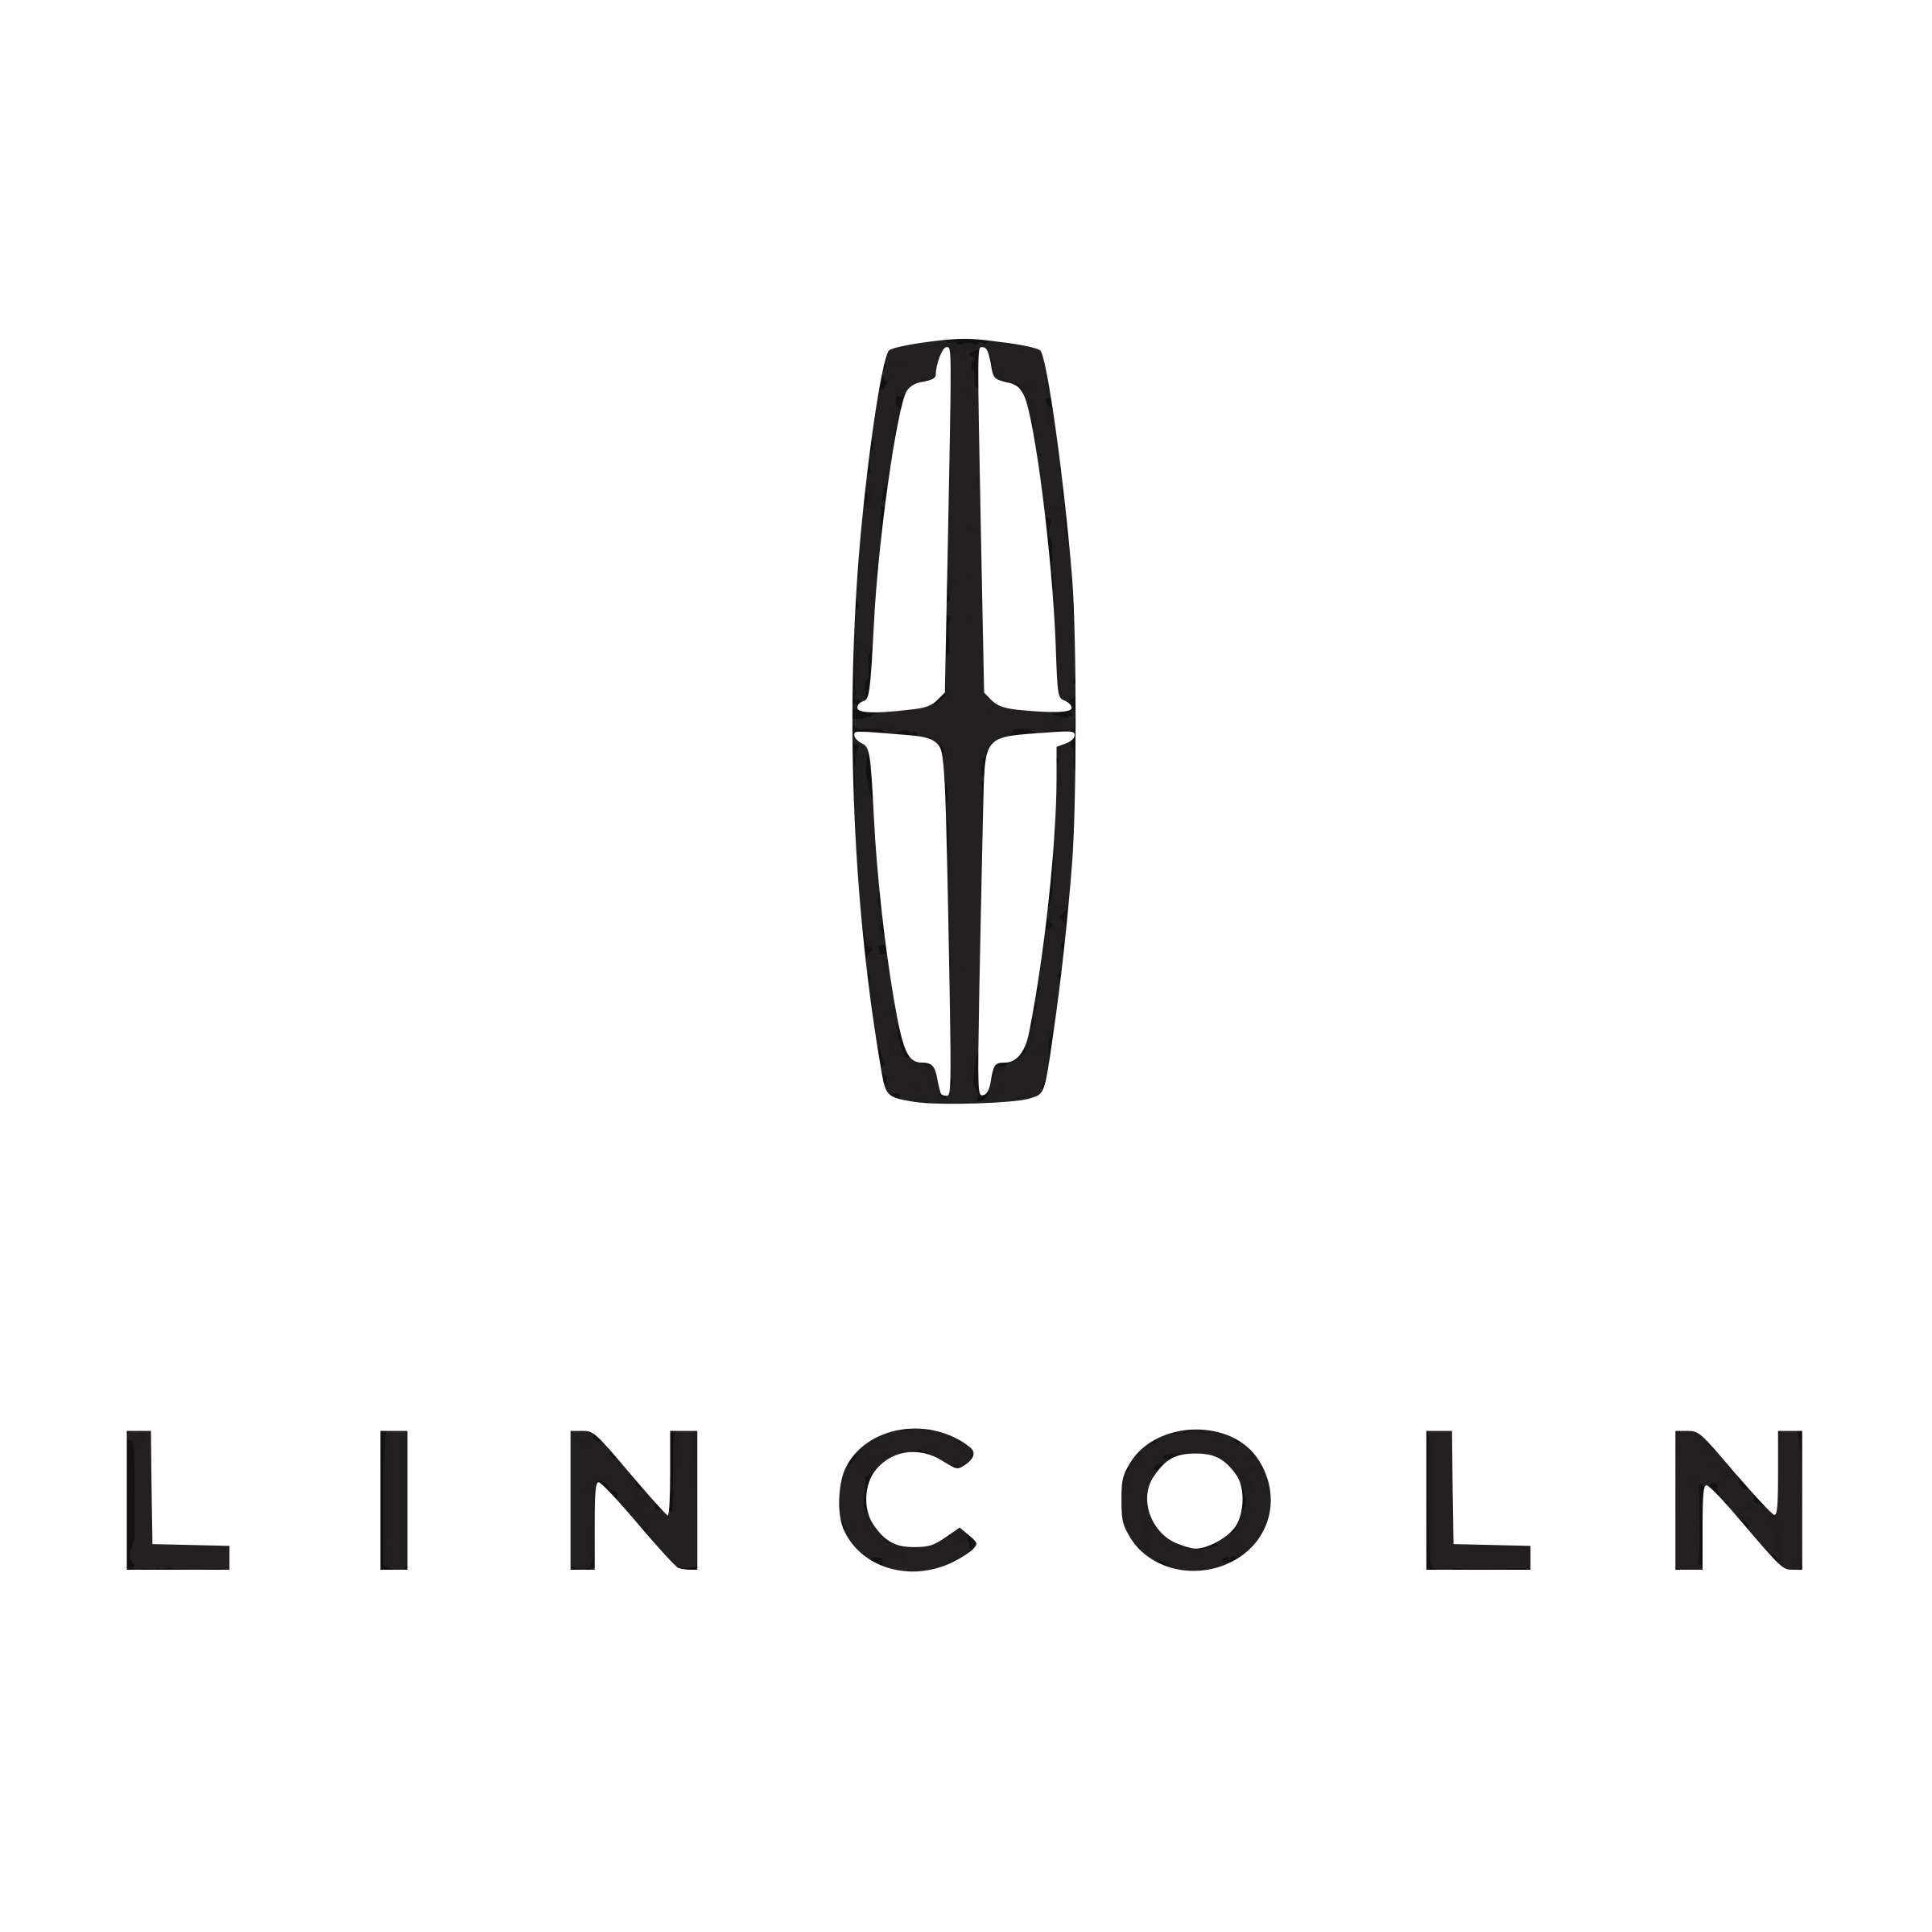 Lincoln Logo - Lincoln Logo PNG Transparent & SVG Vector